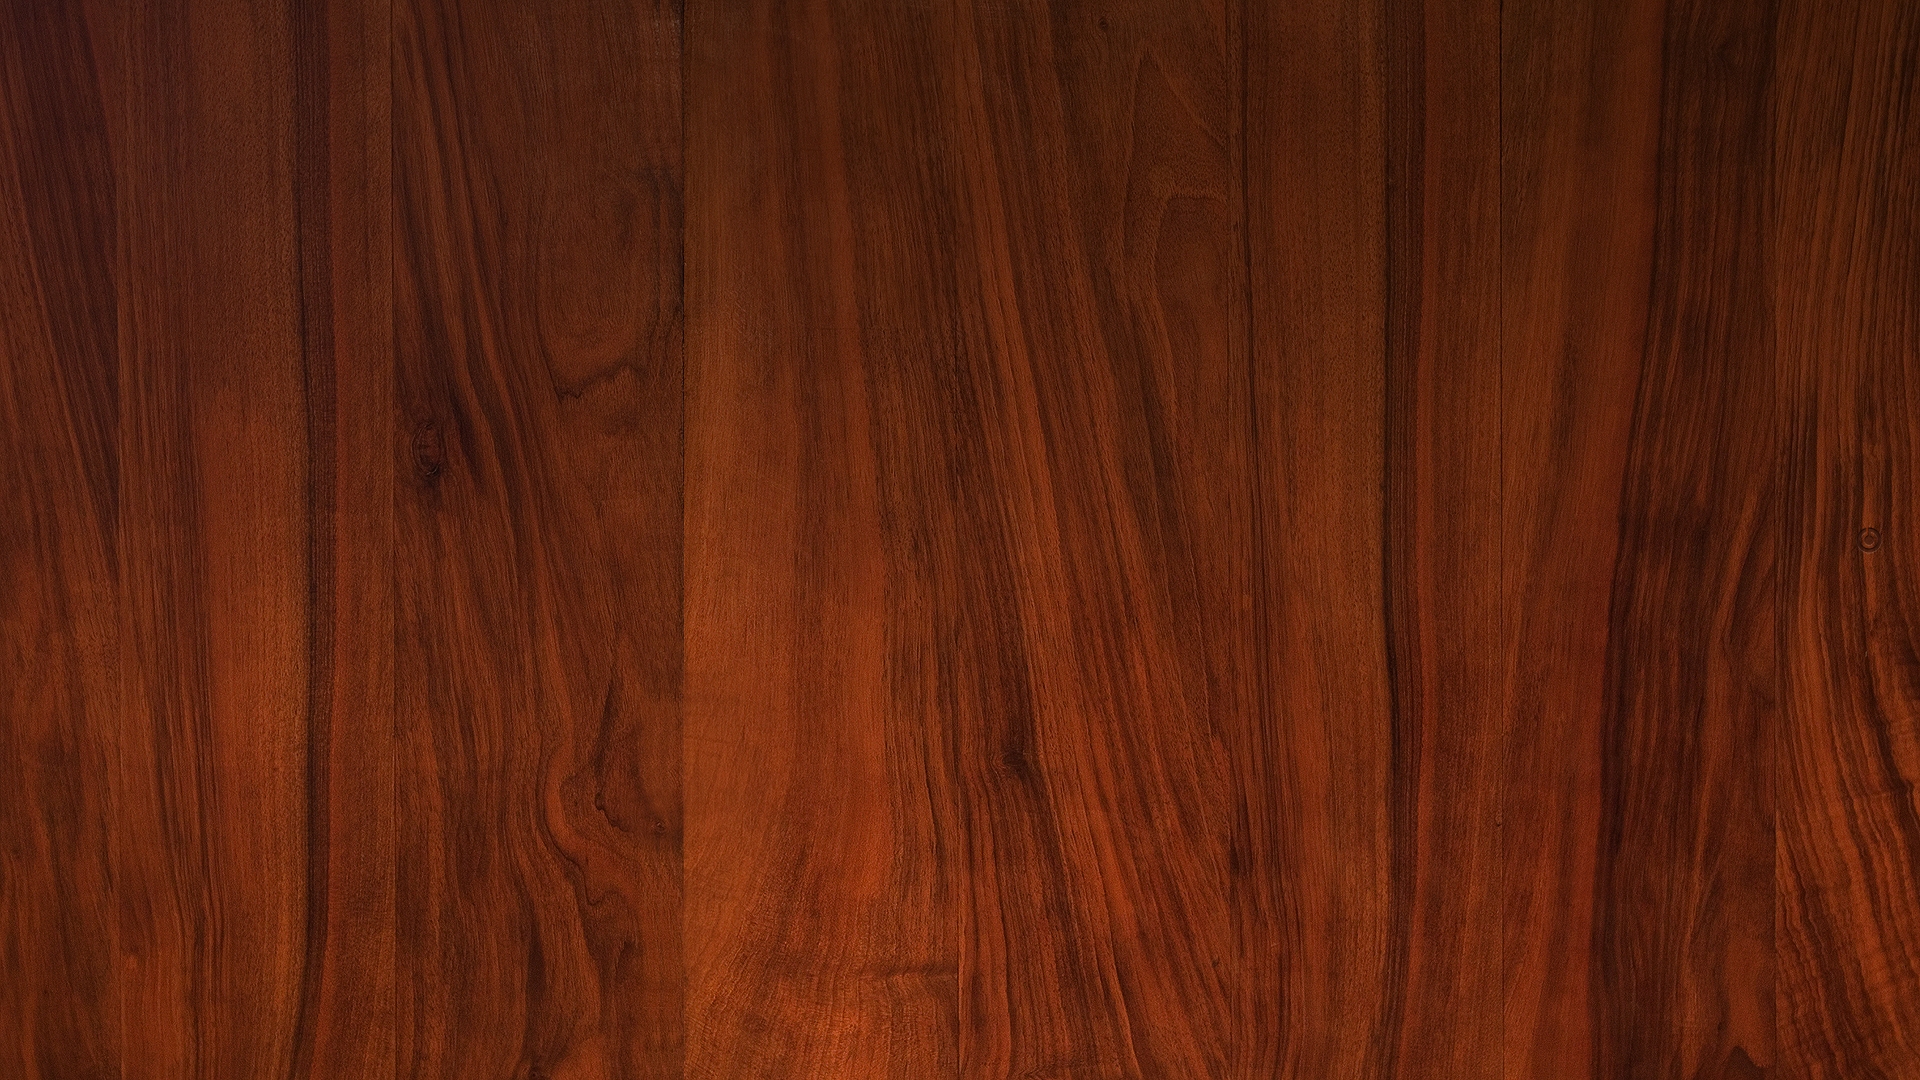 Dark Wood Texture Desktop Wallpaper, glossy oak table - GarryHome